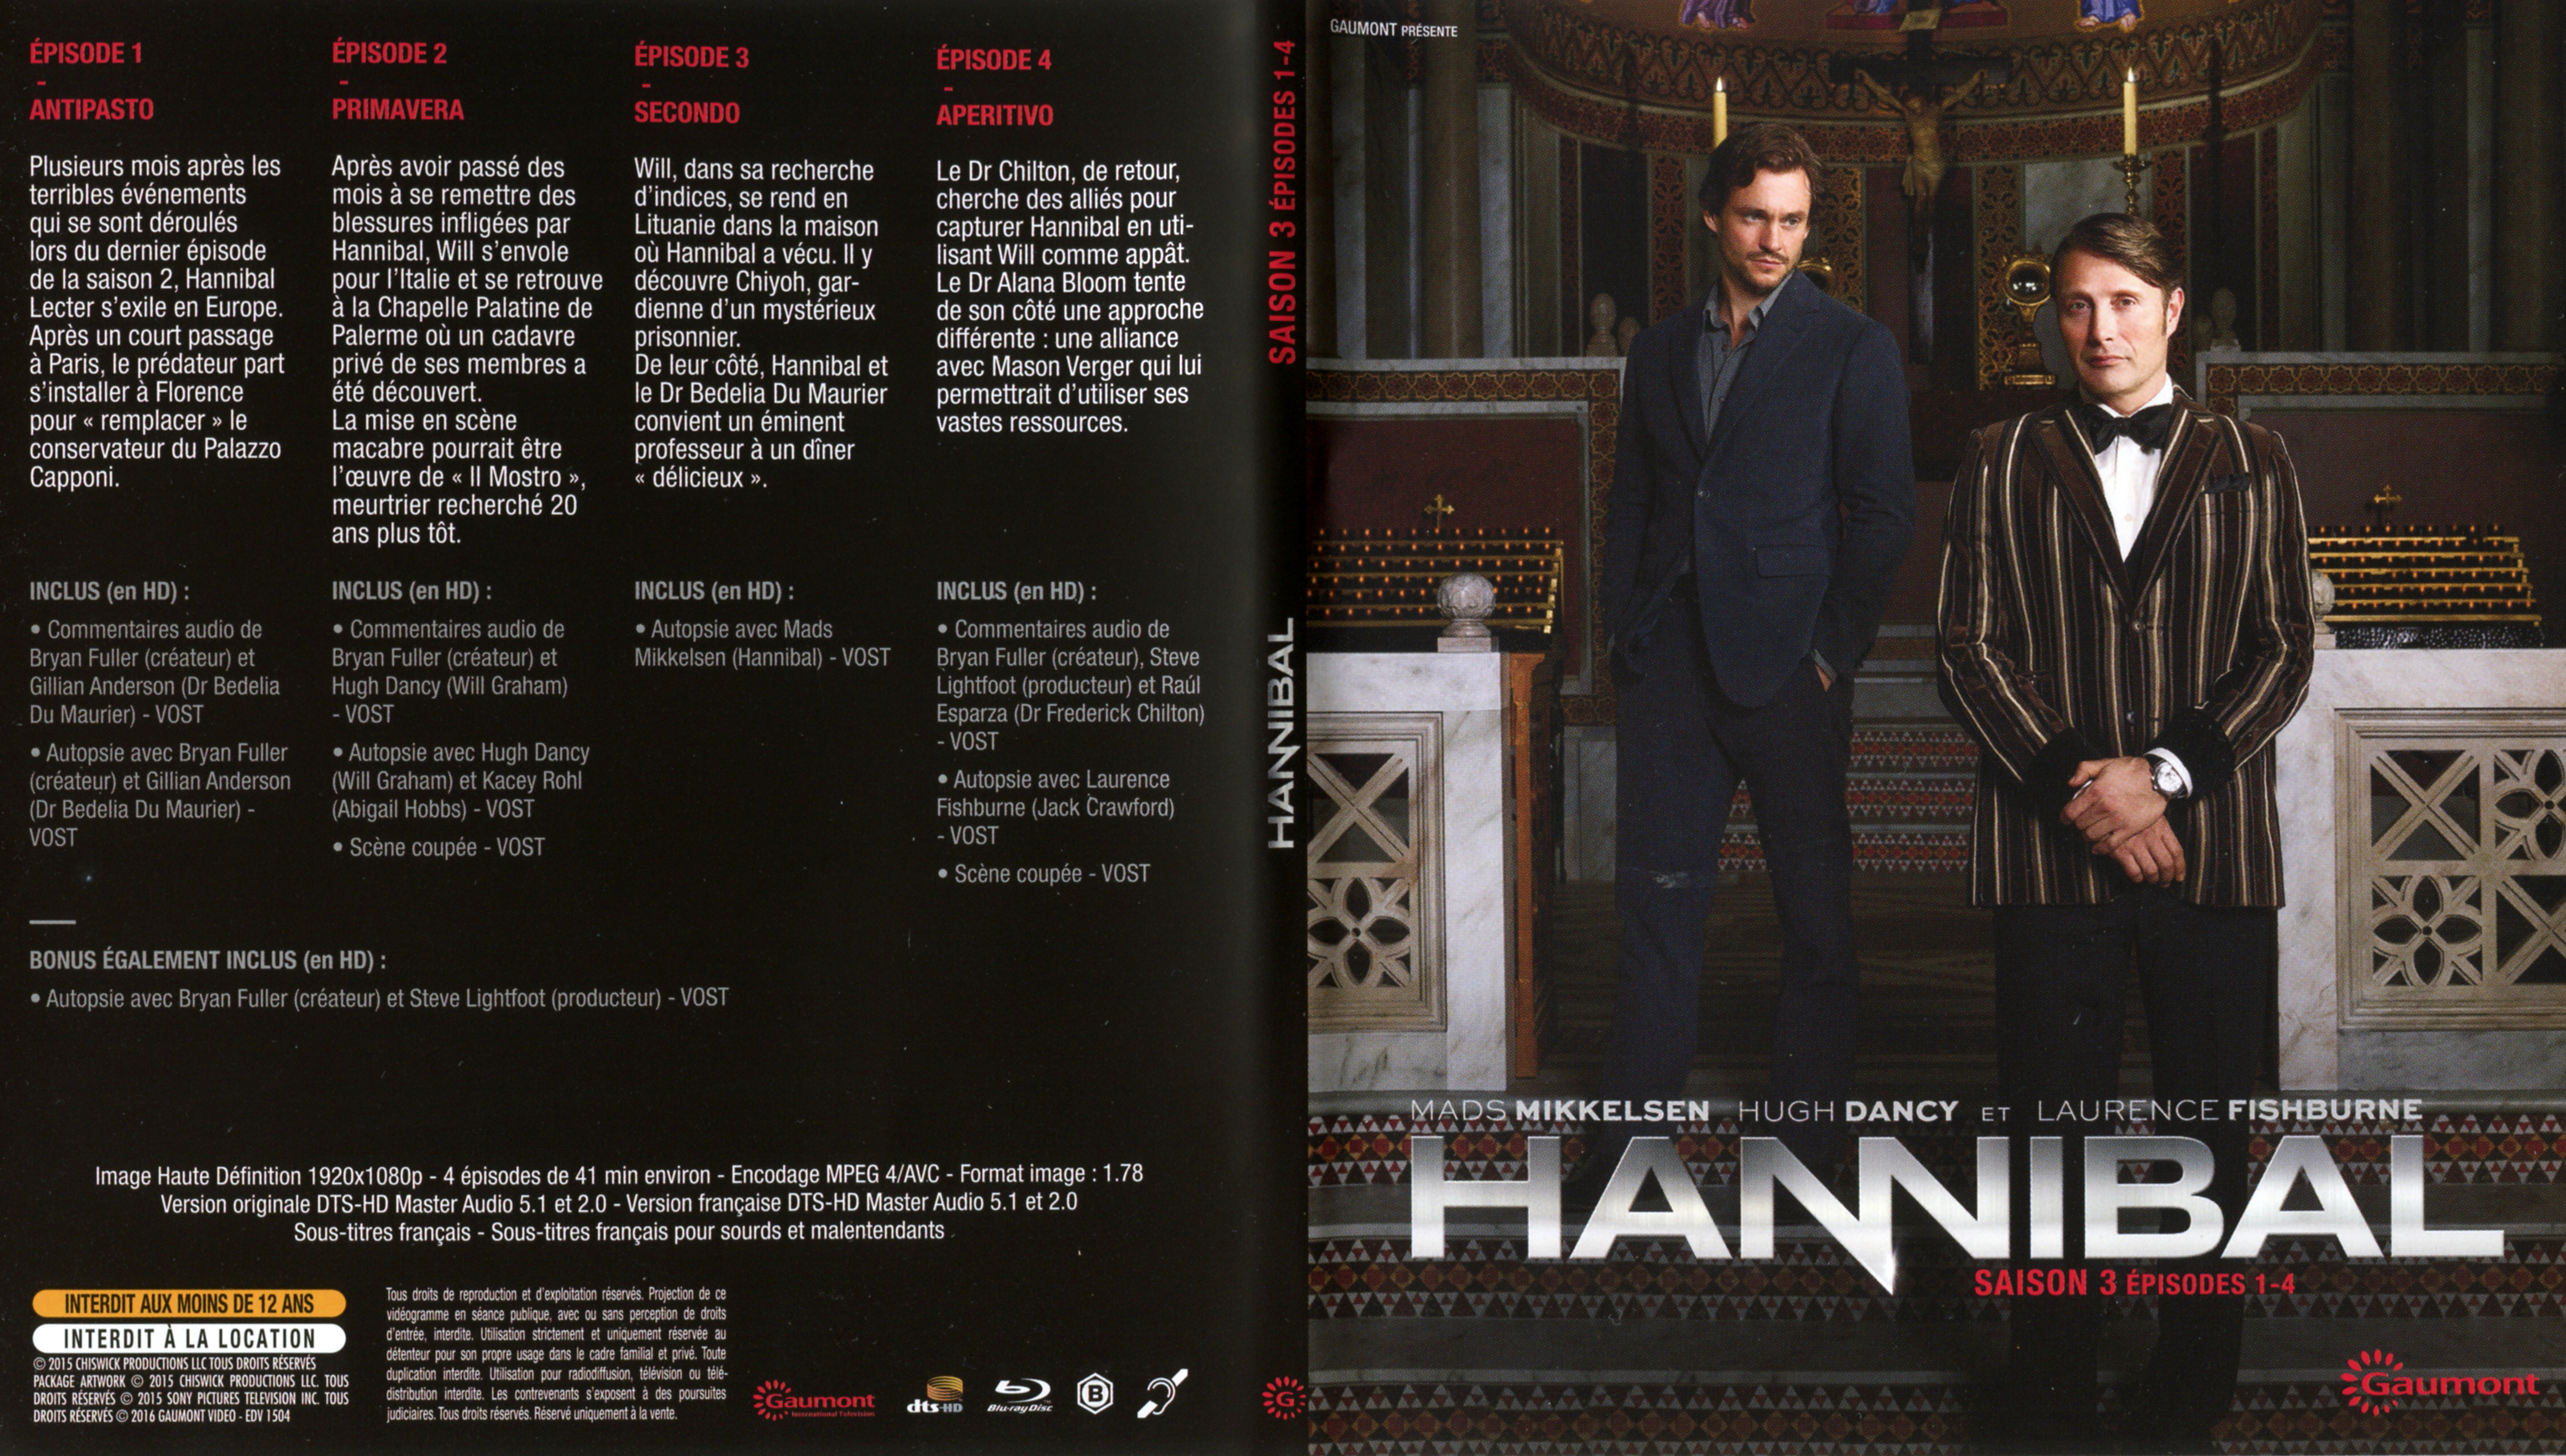 Jaquette DVD Hannibal Saison 3 DISC 1